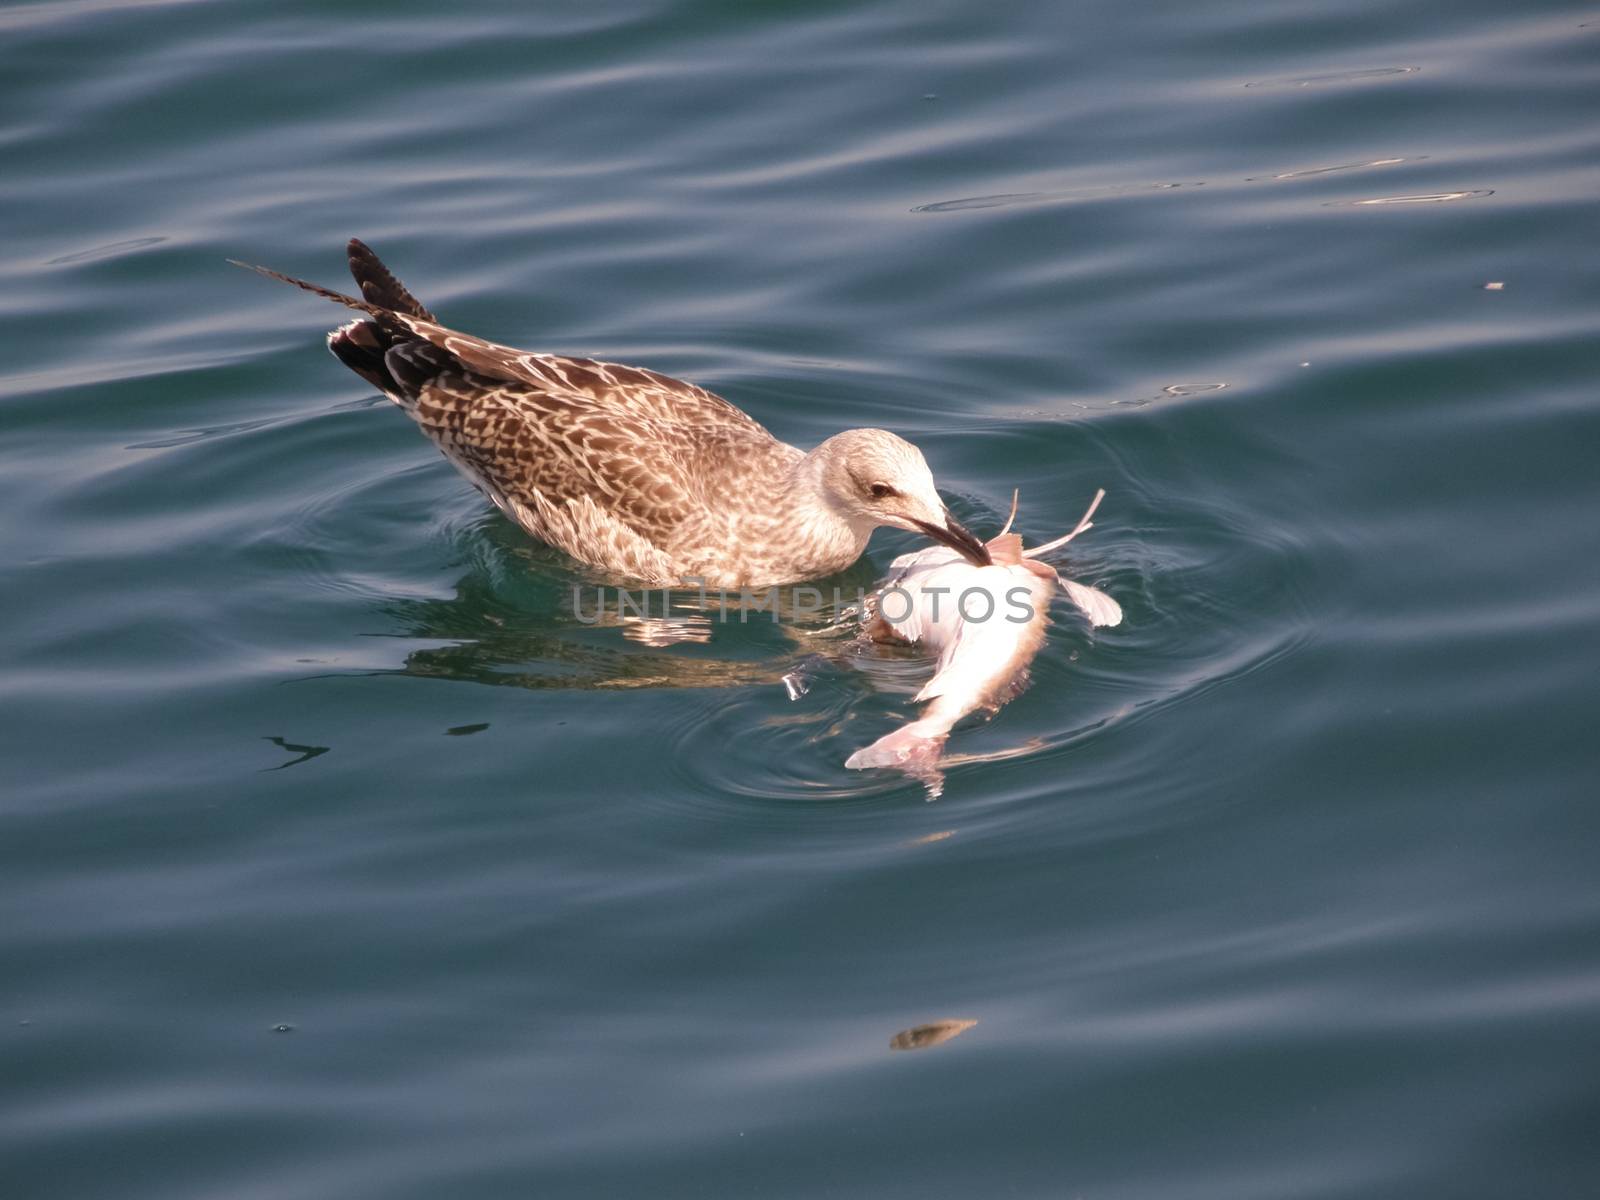 A seagull eats dead fish. Feeding seagulls in the sea.